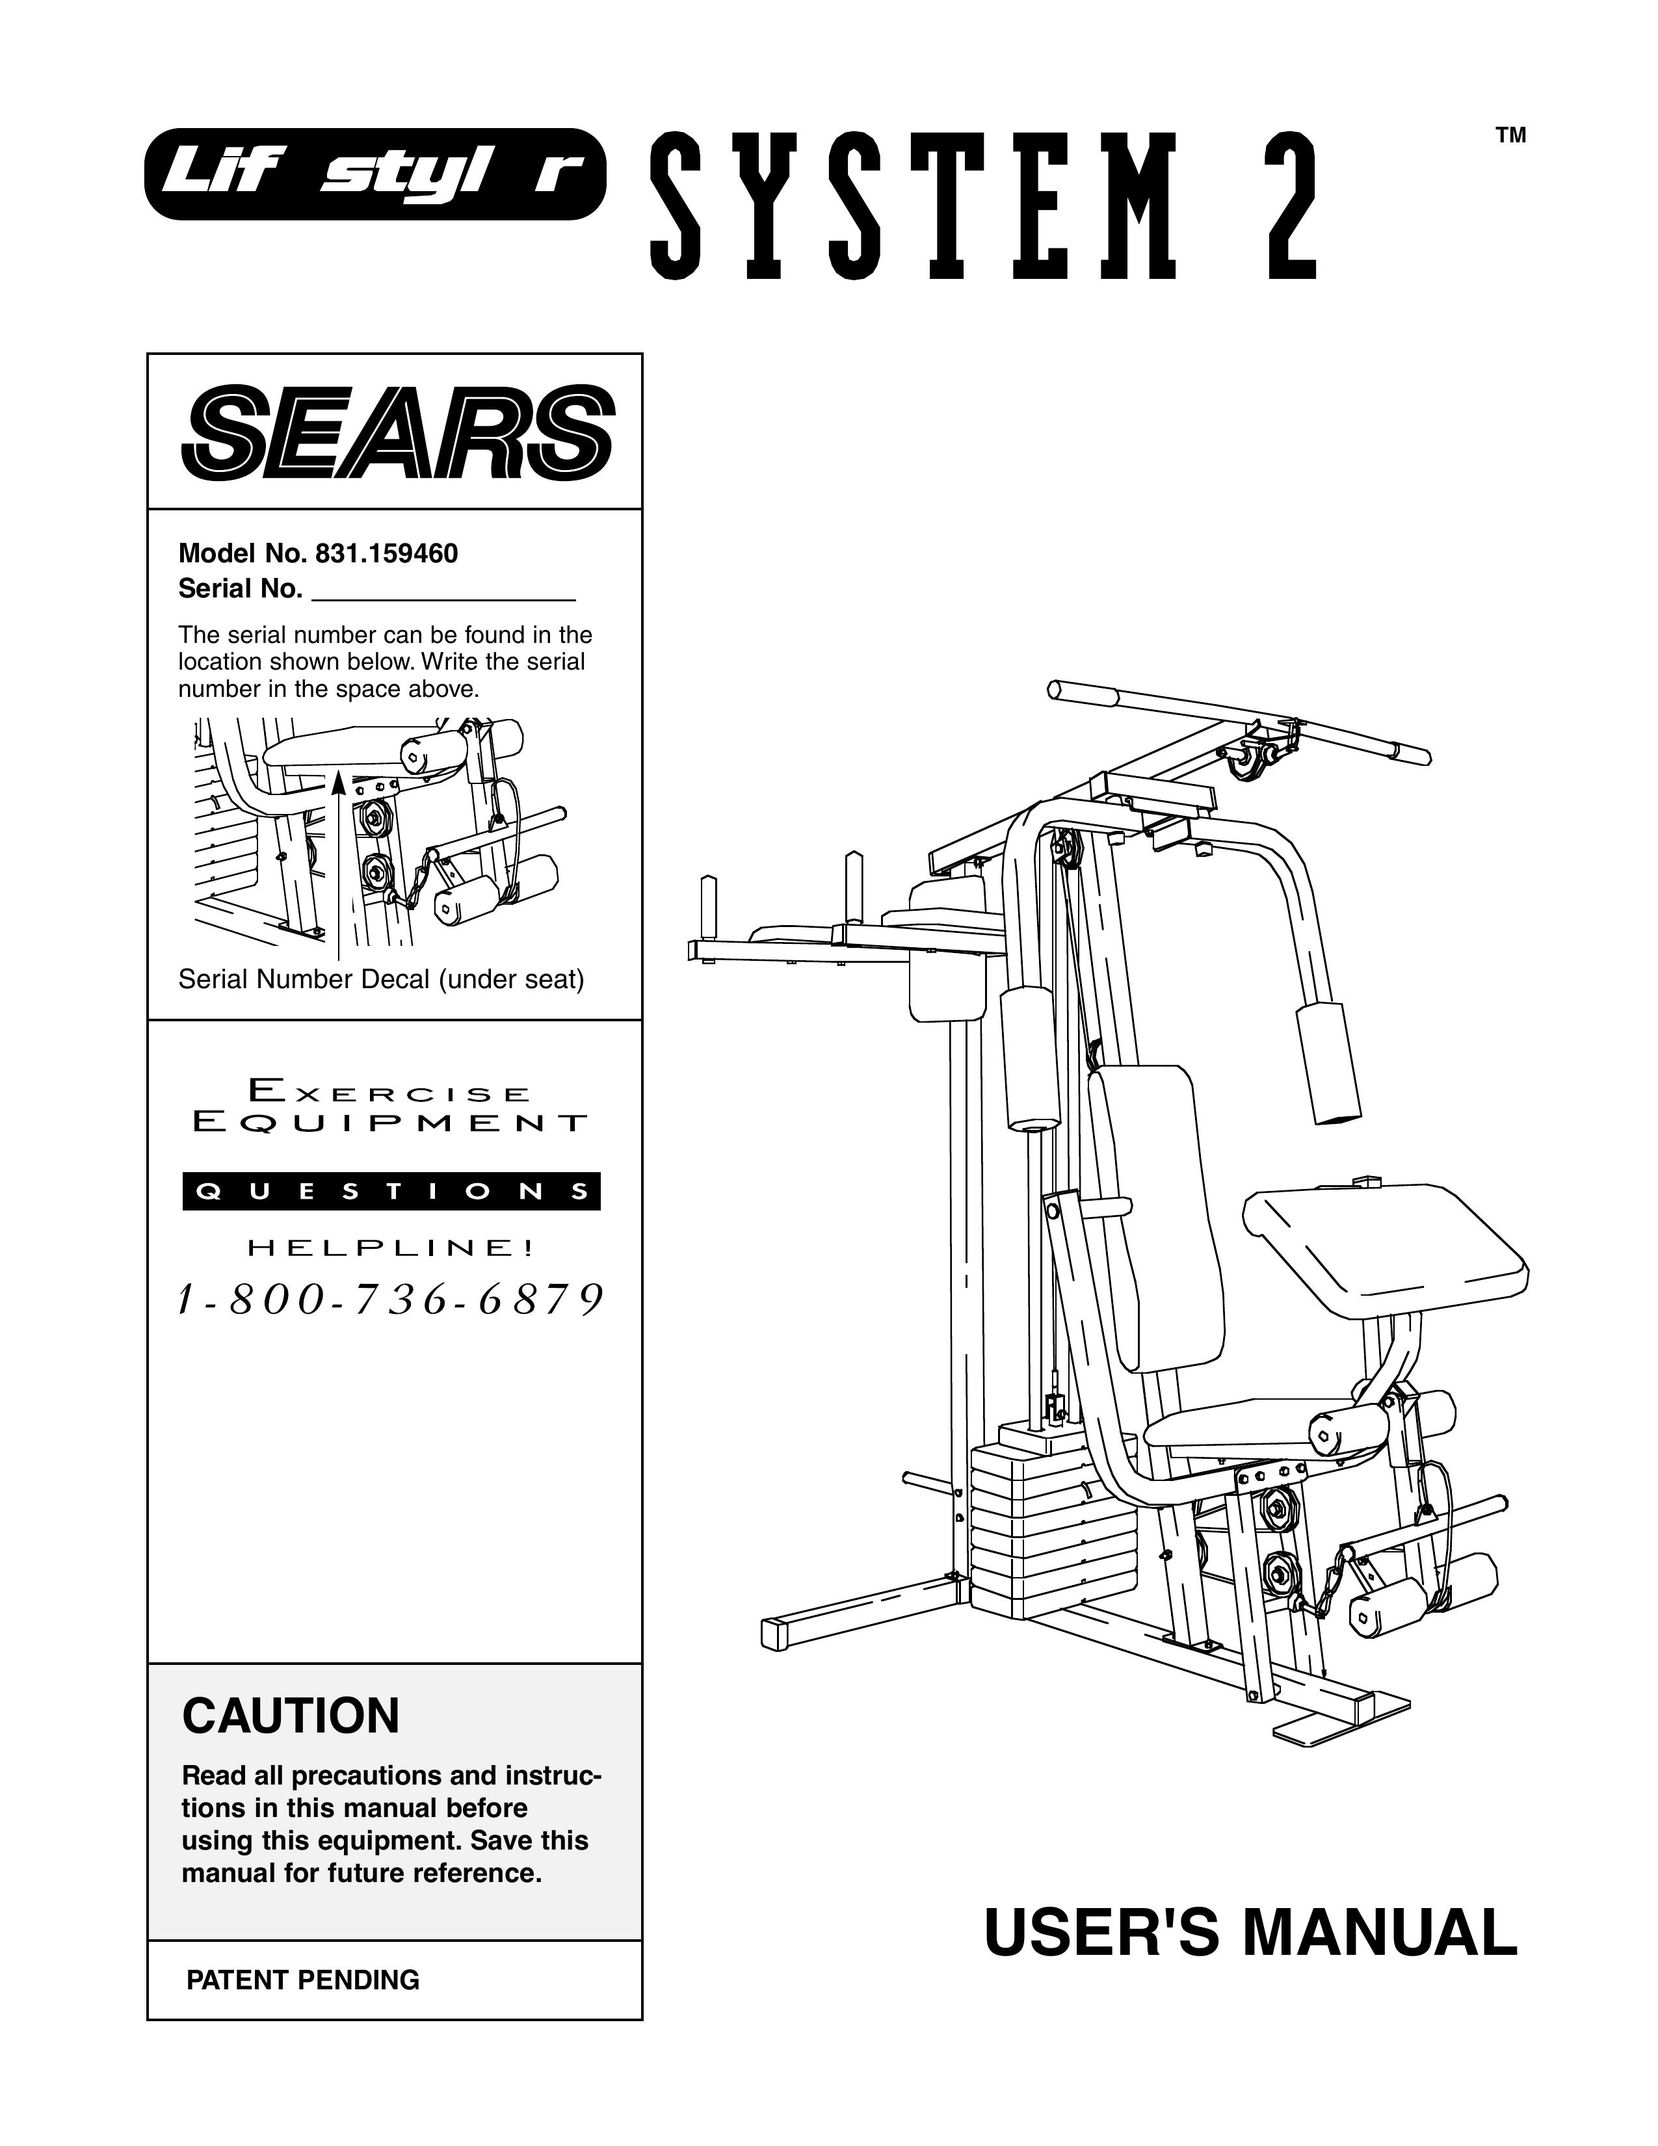 Sears 831.159460 Home Gym User Manual